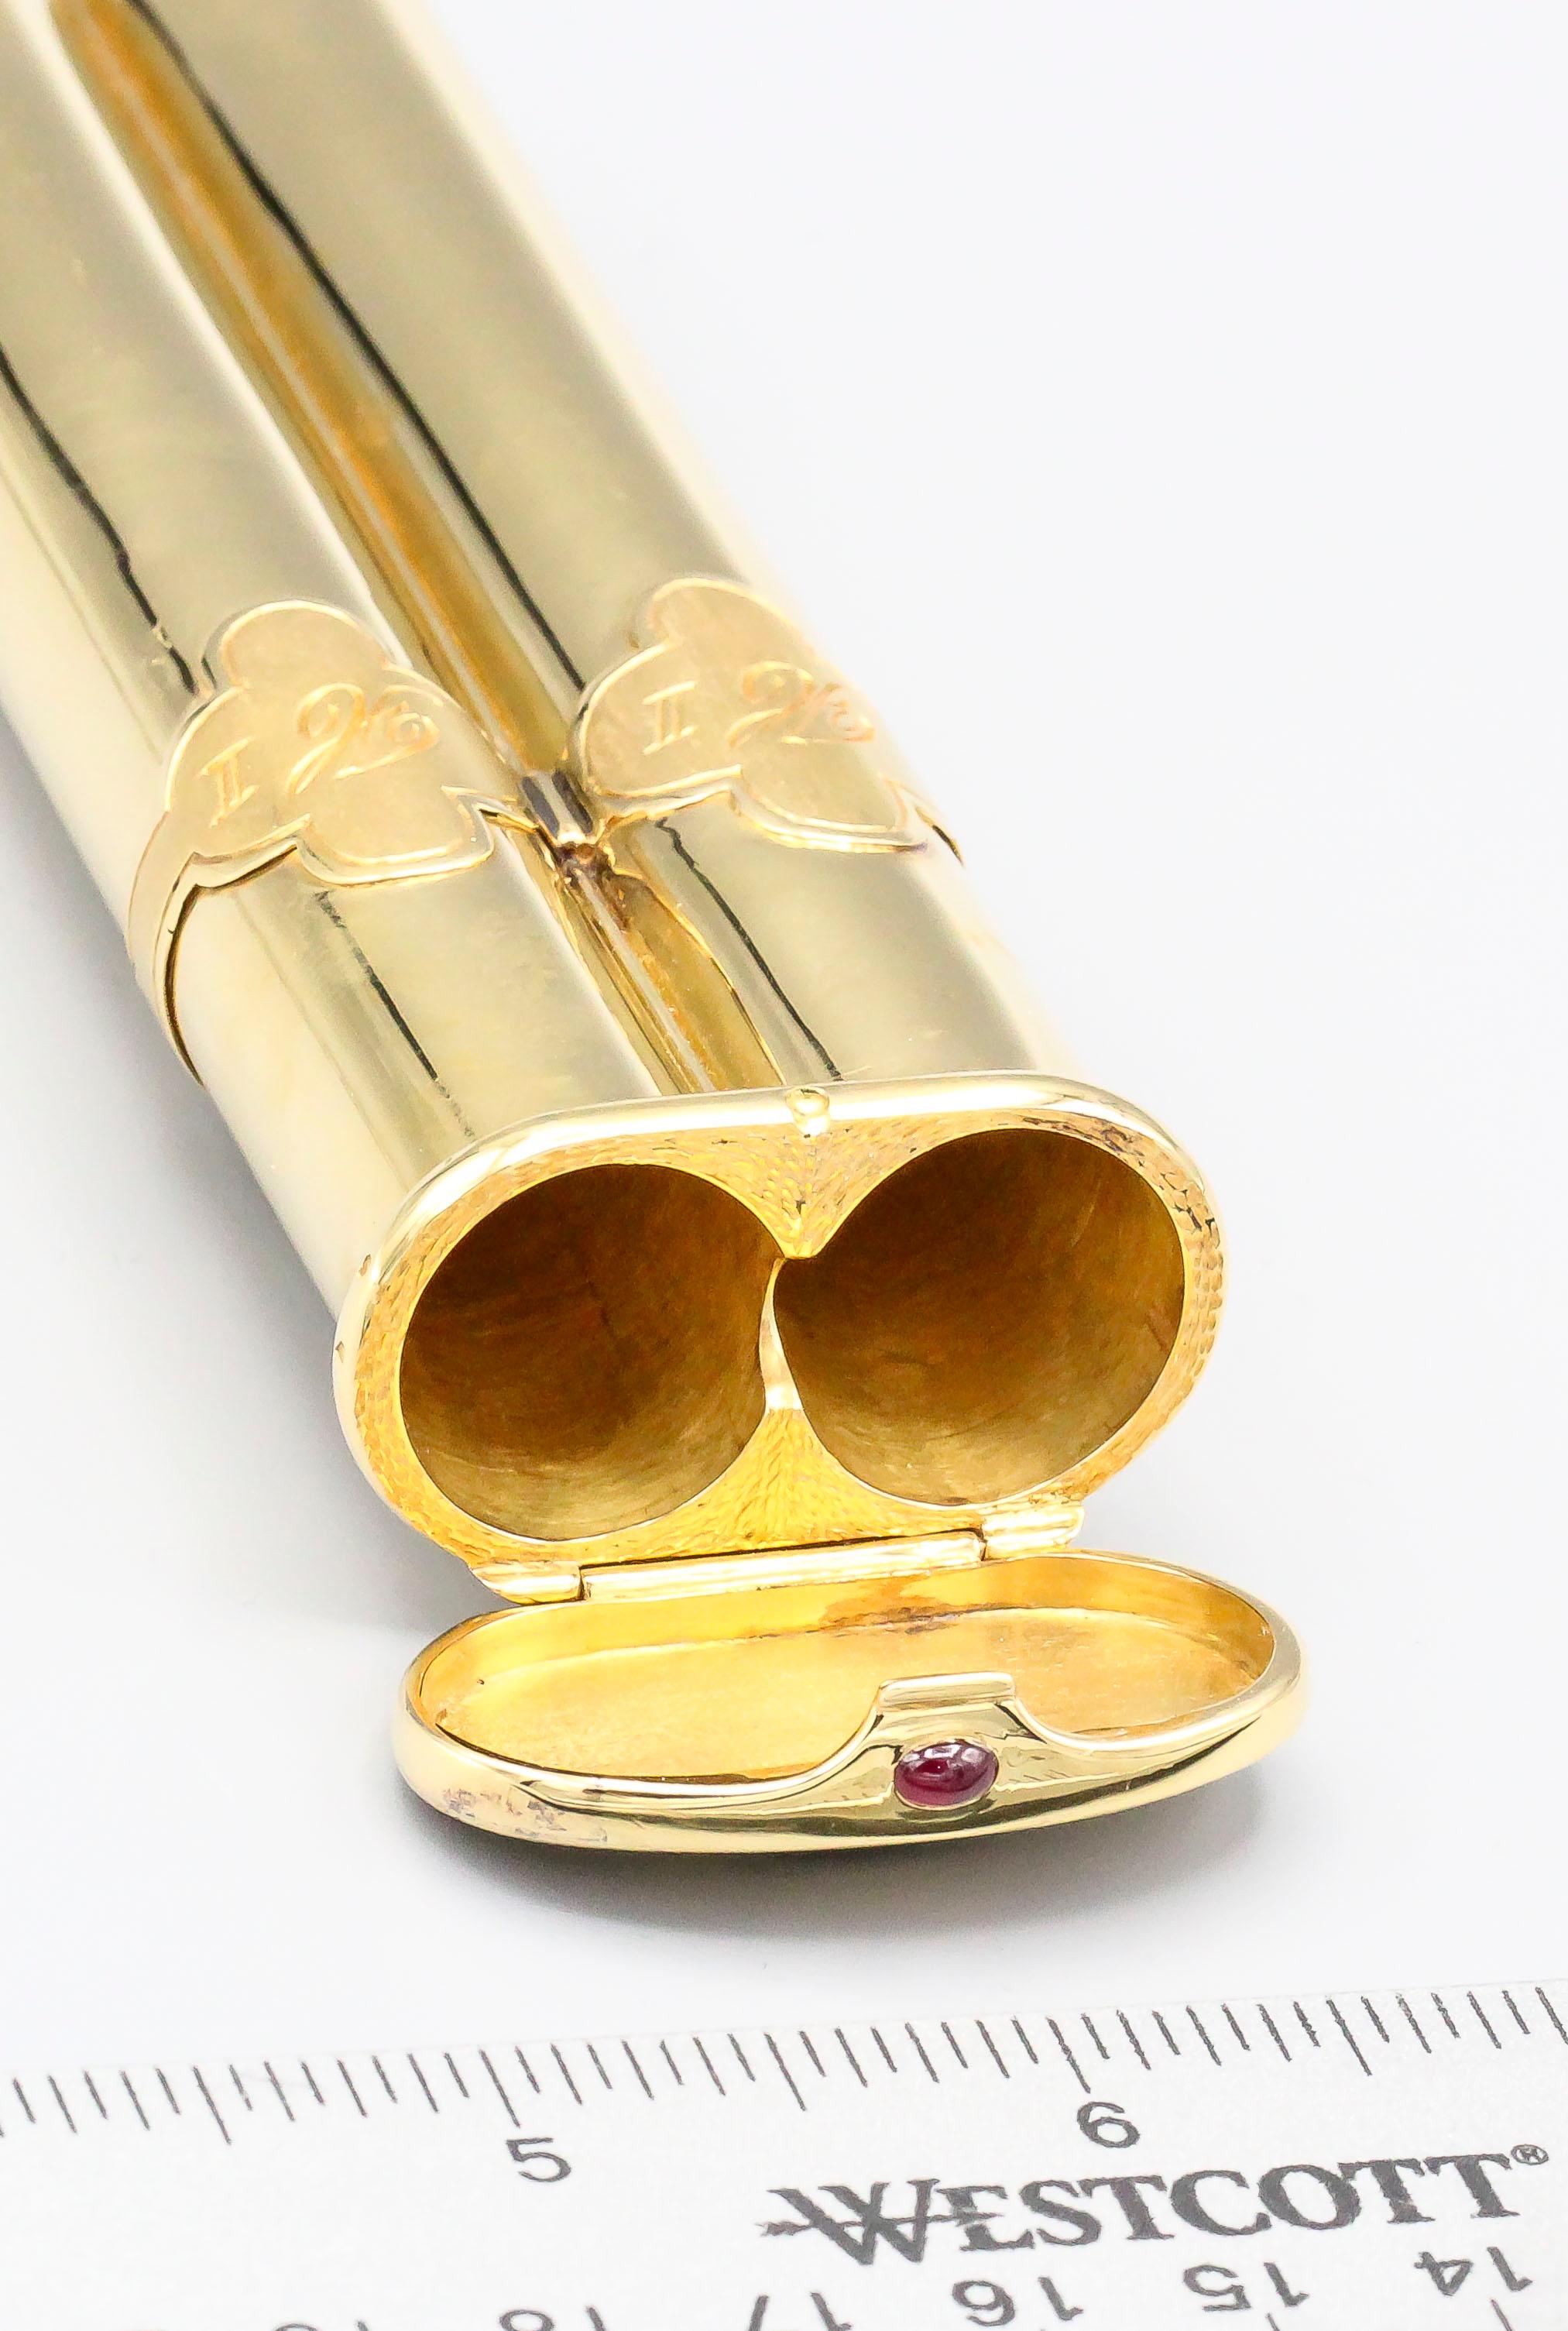 gold cigar holder